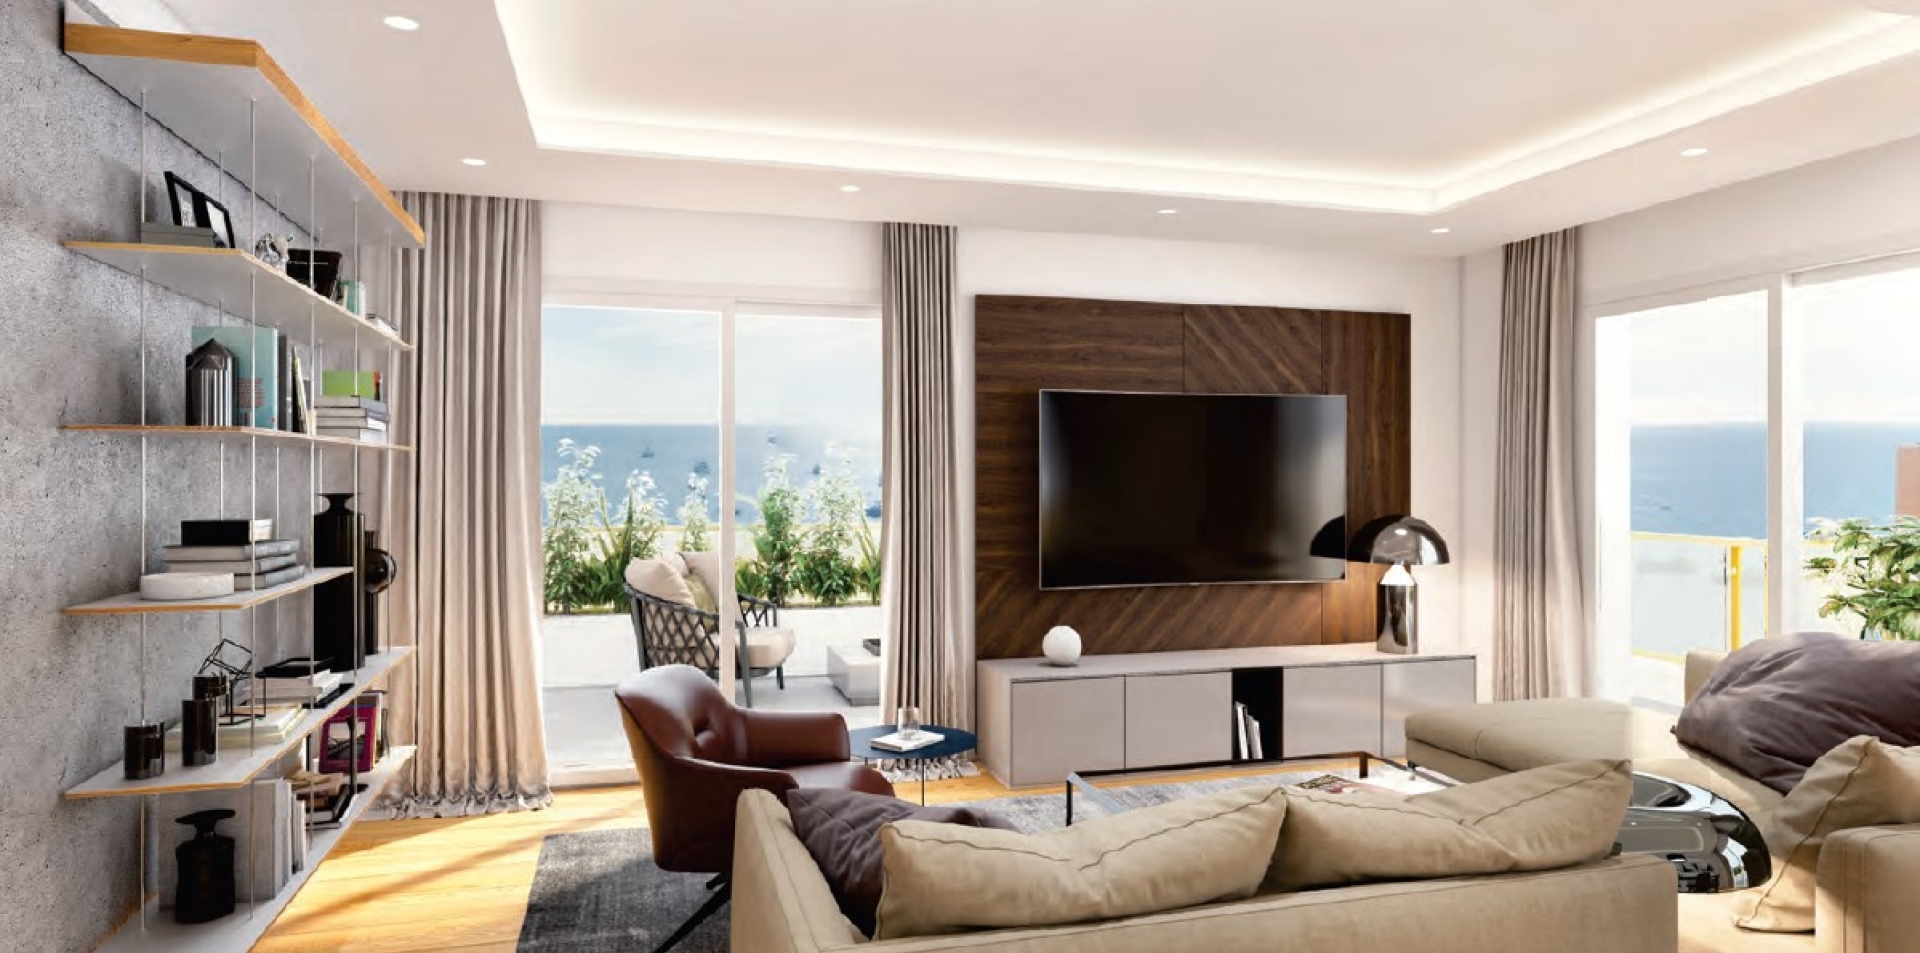 Dotta Appartement de 6+ pieces a vendre - VILLA ANNONCIADE - La Rousse - Monaco - imgimage8